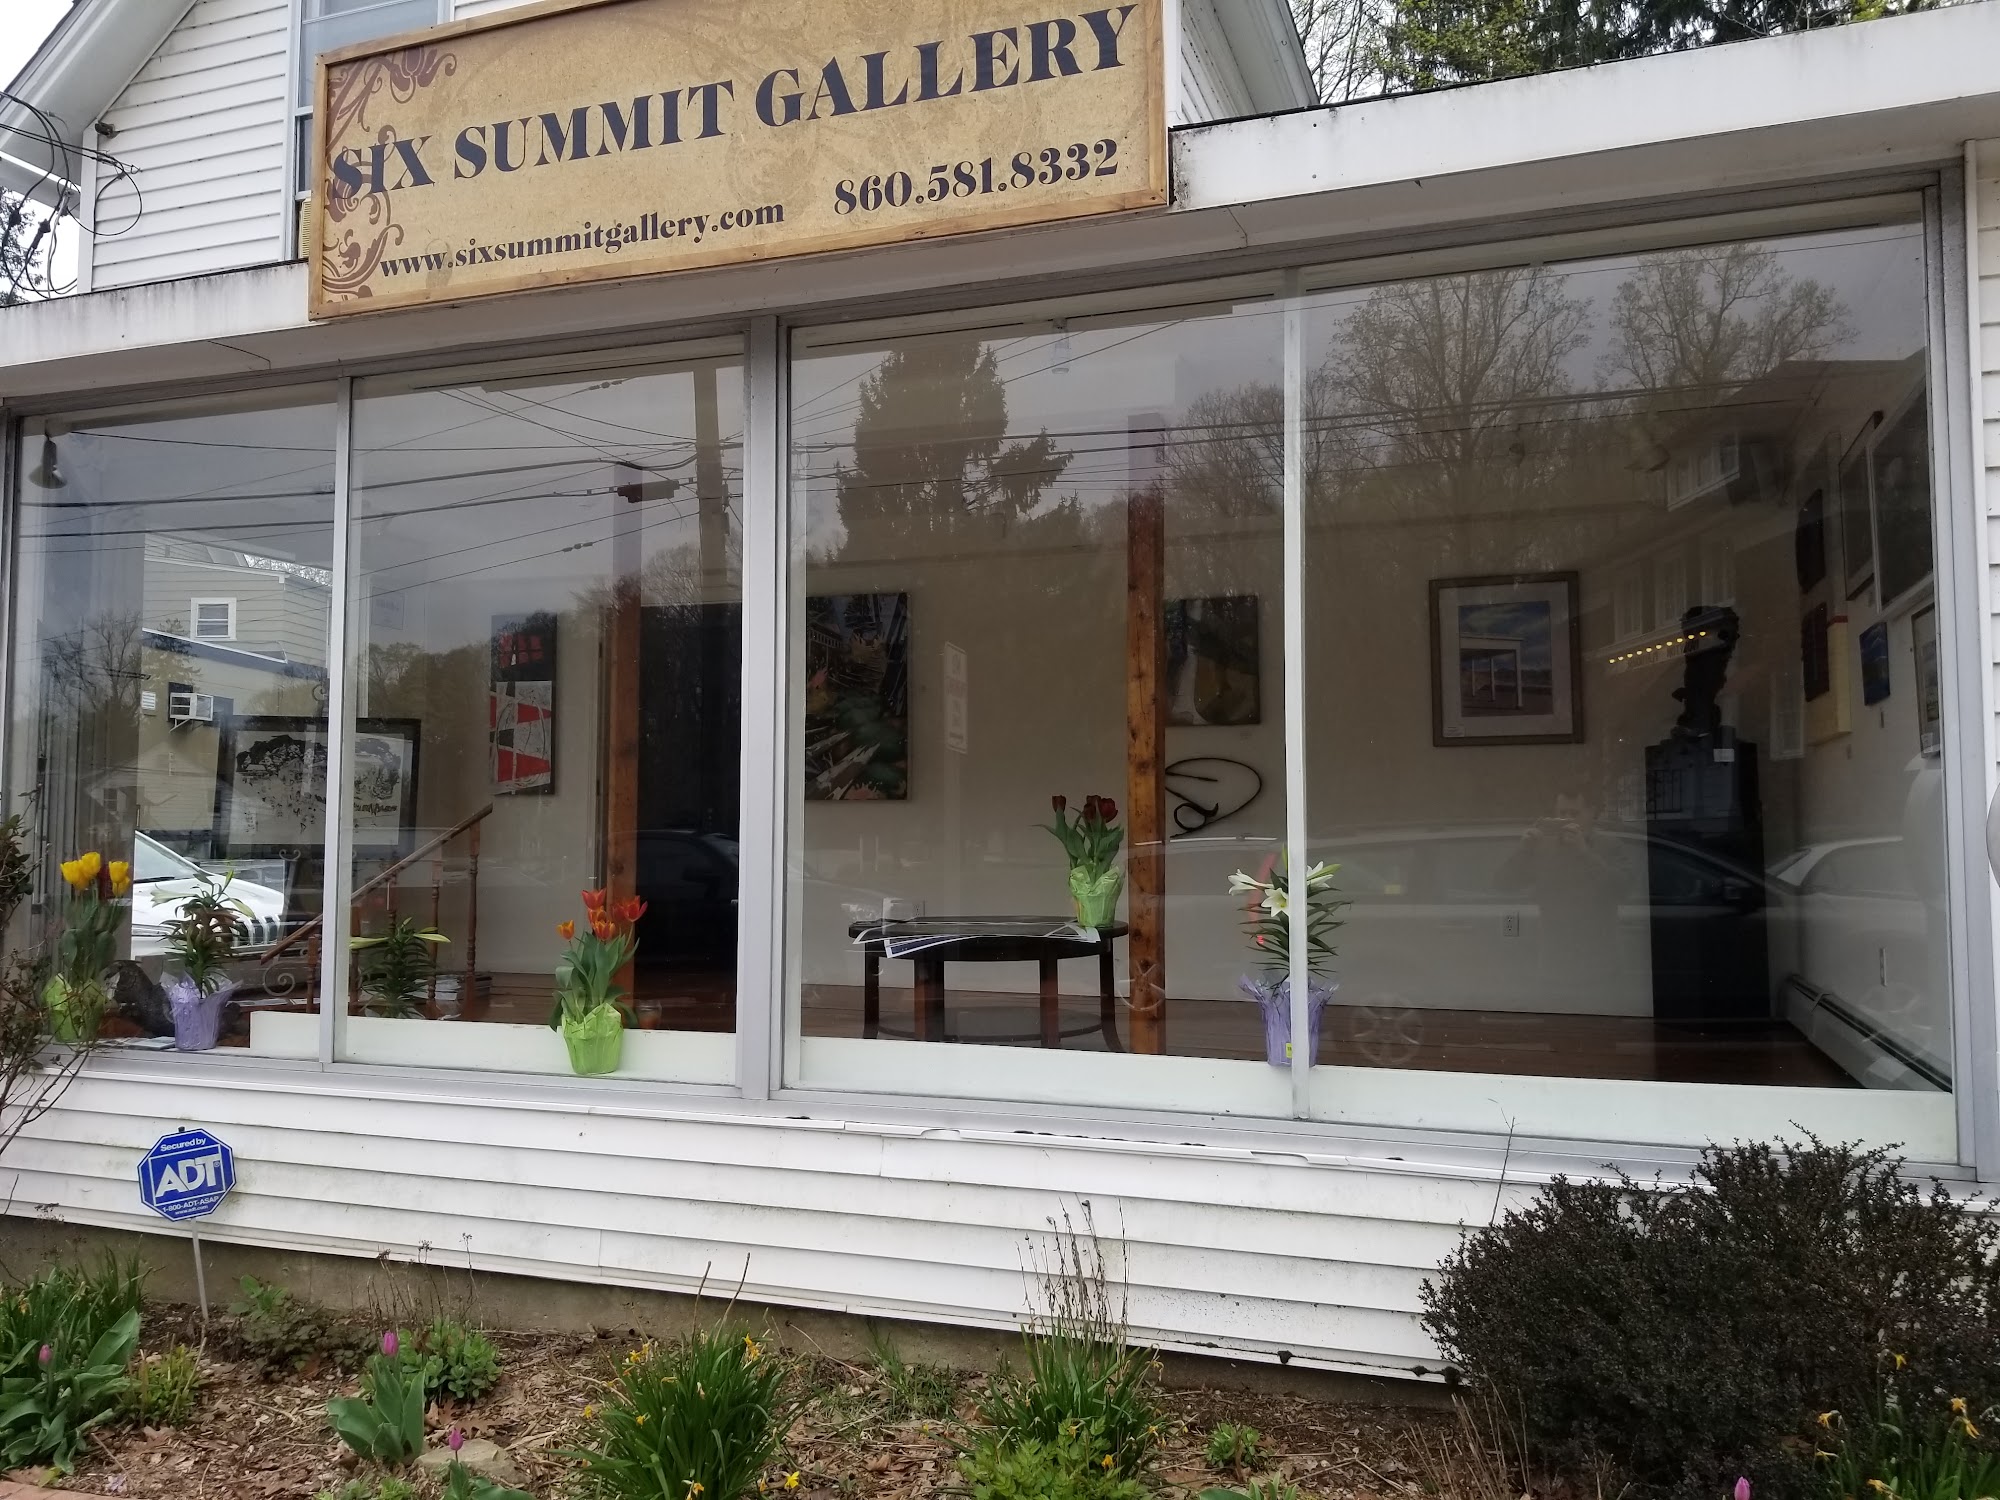 Six Summit Gallery